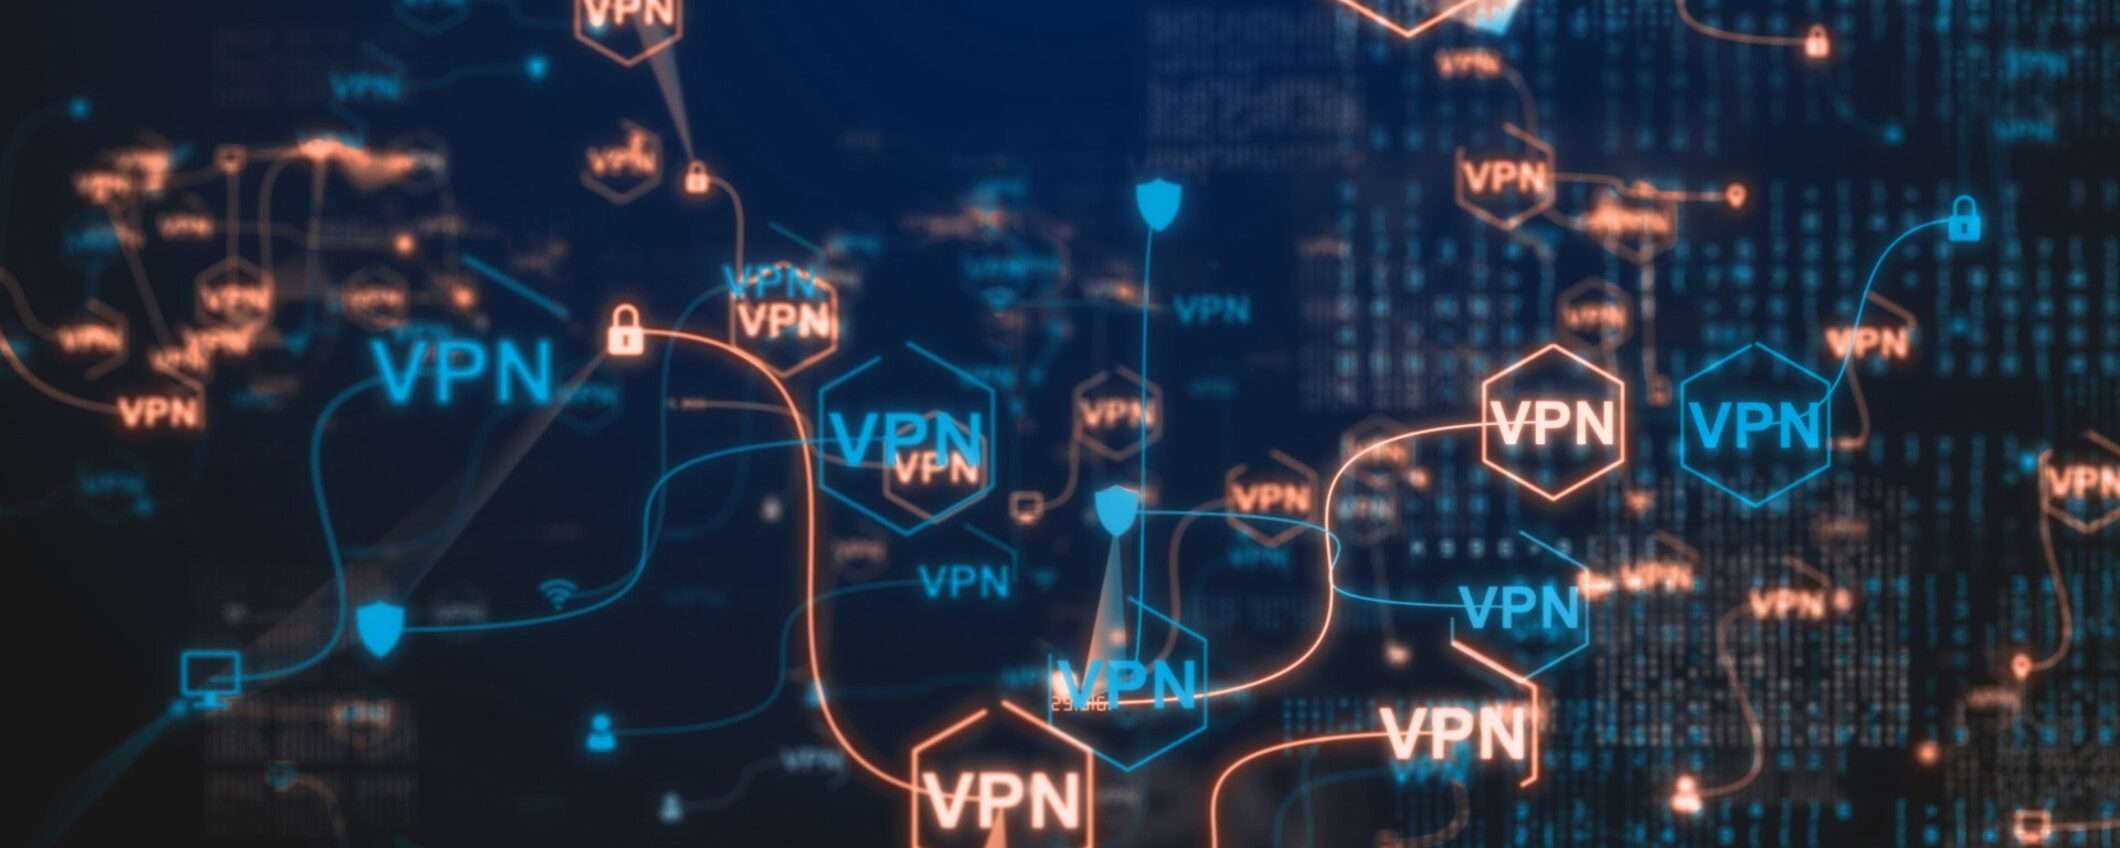 Offerta in scadenza di Private Internet Access: VPN a meno di 2€